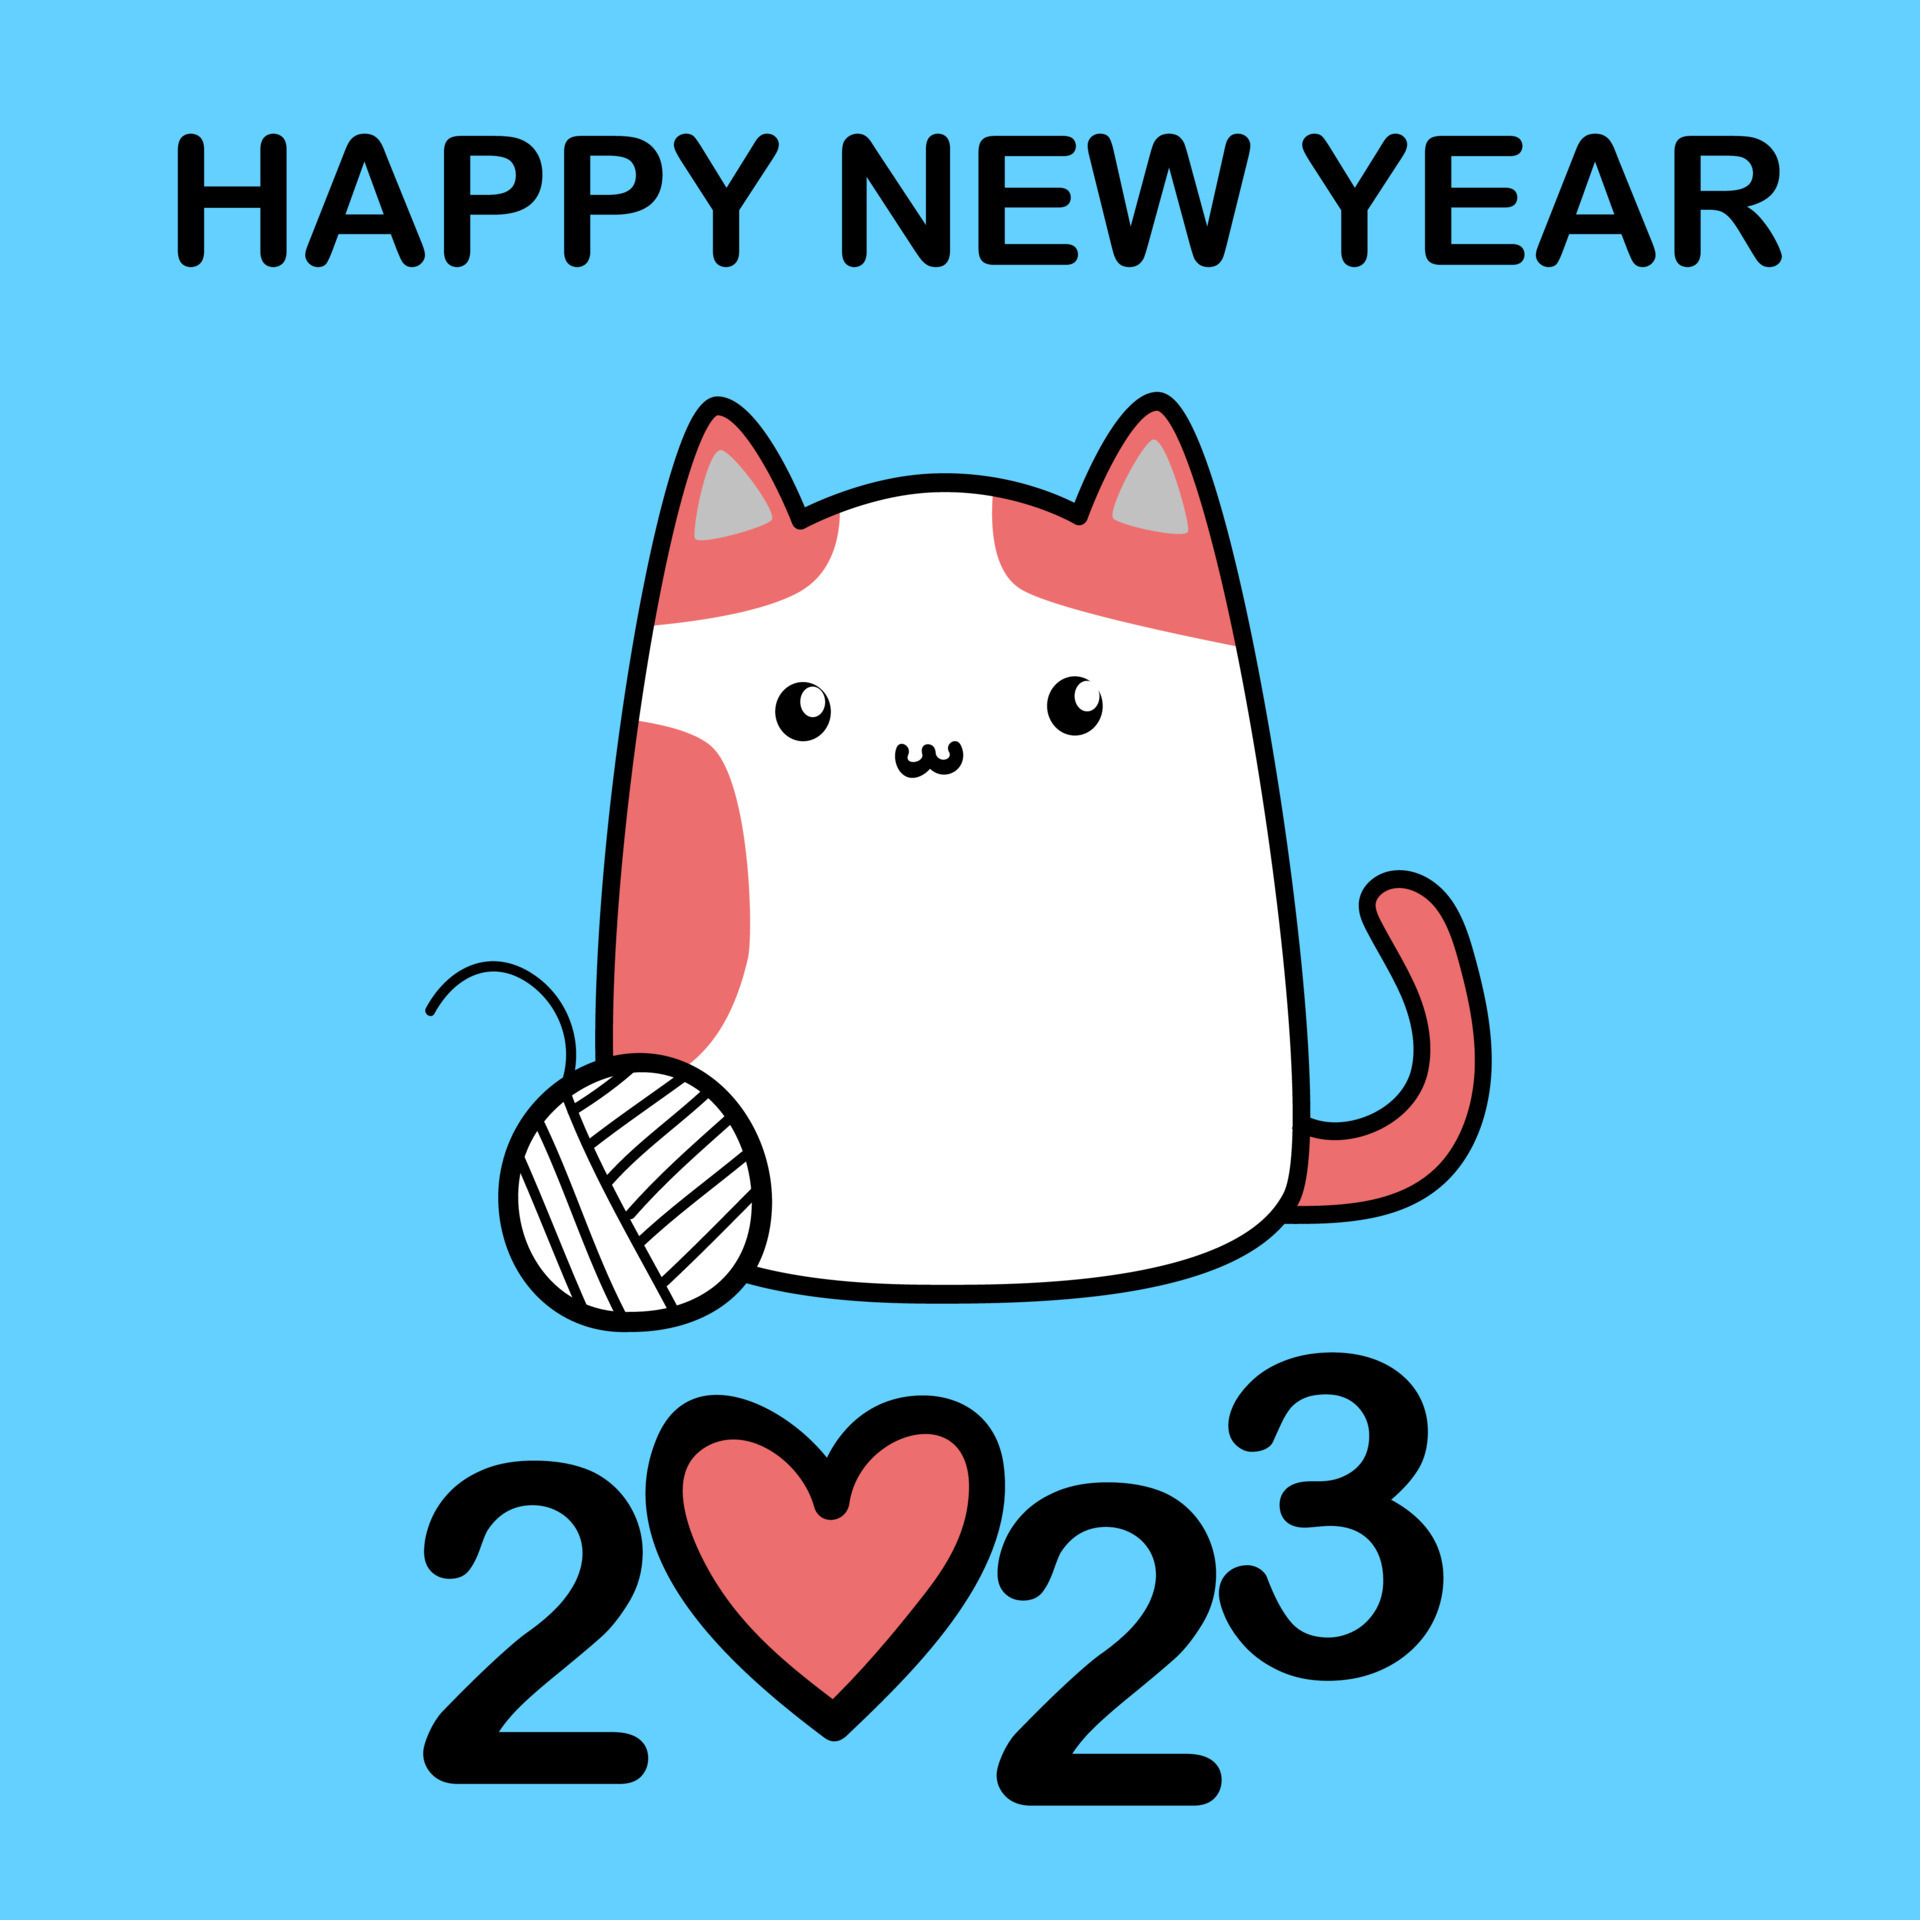 Happy New Year Cartoon Images 2023 Kitten Free Vector Illustration 13480866  Vector Art at Vecteezy